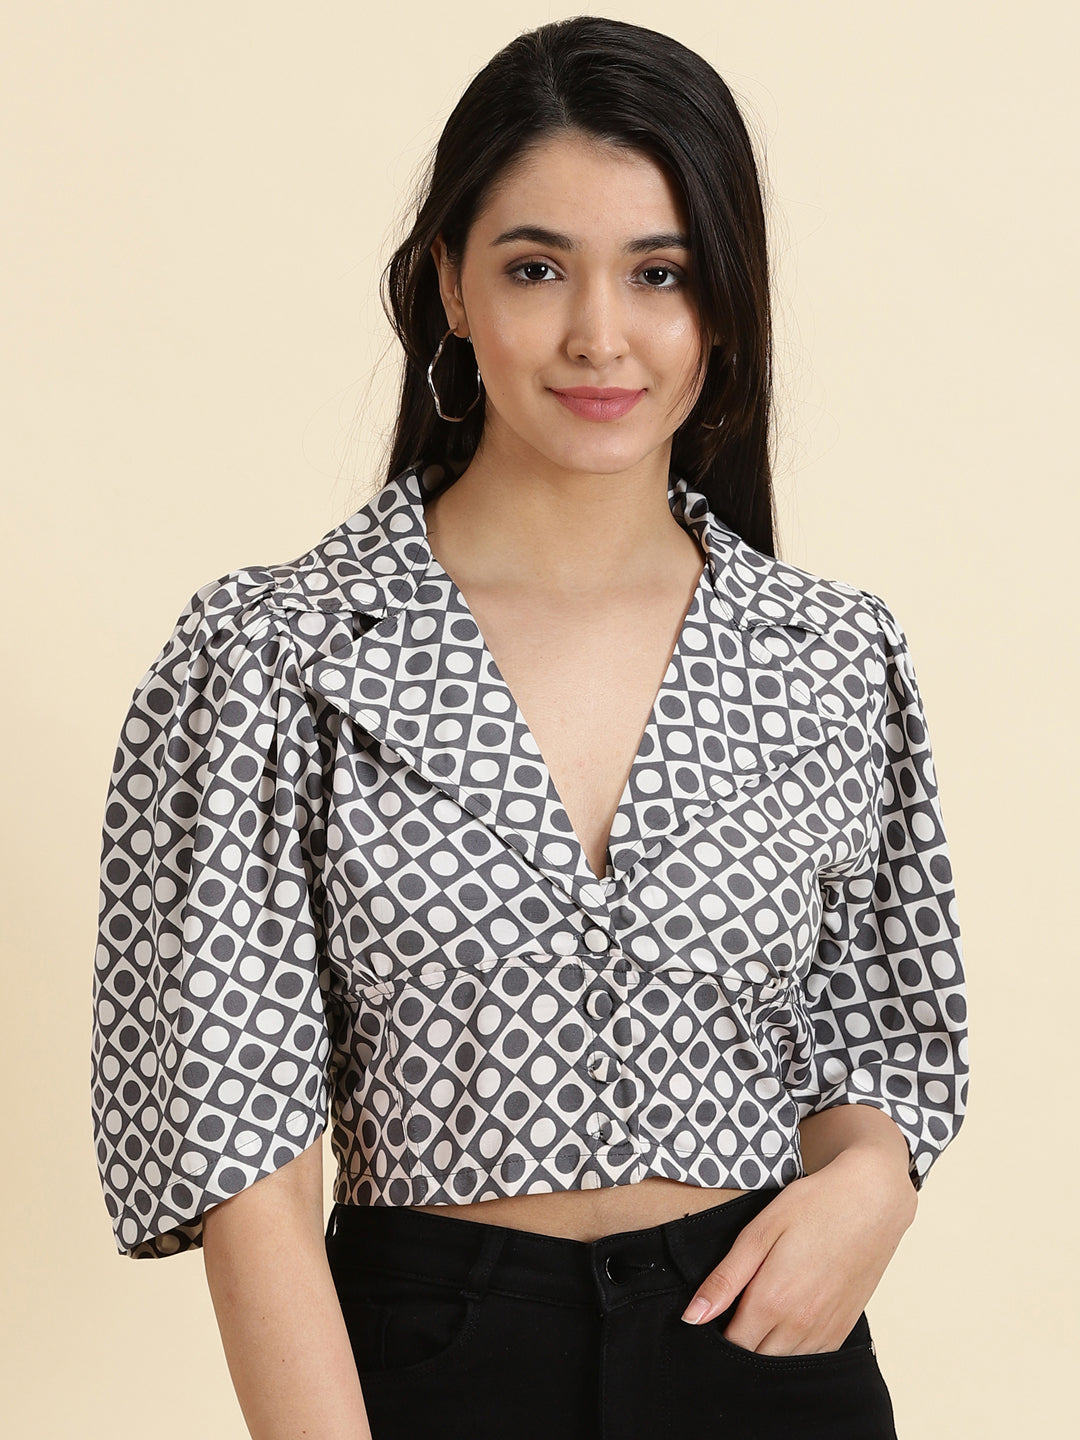 Women's White Printed Shirt Style Crop Top